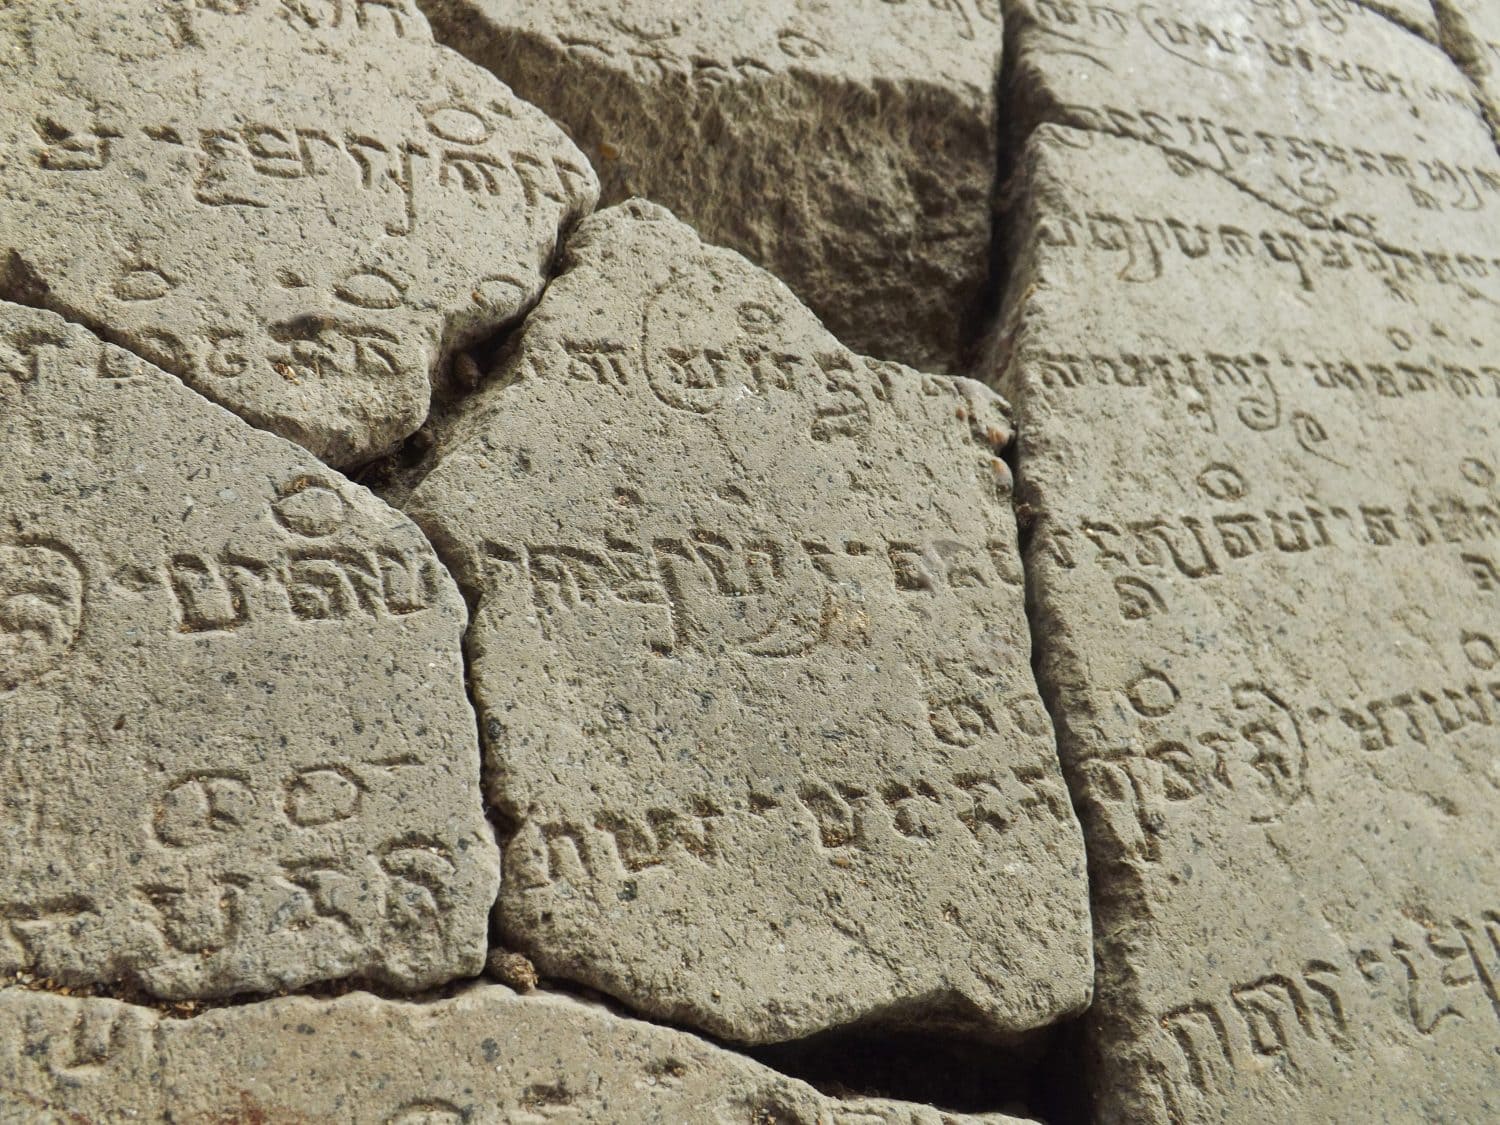 ancient language Sanskrit on stones writing by ancient kingdom